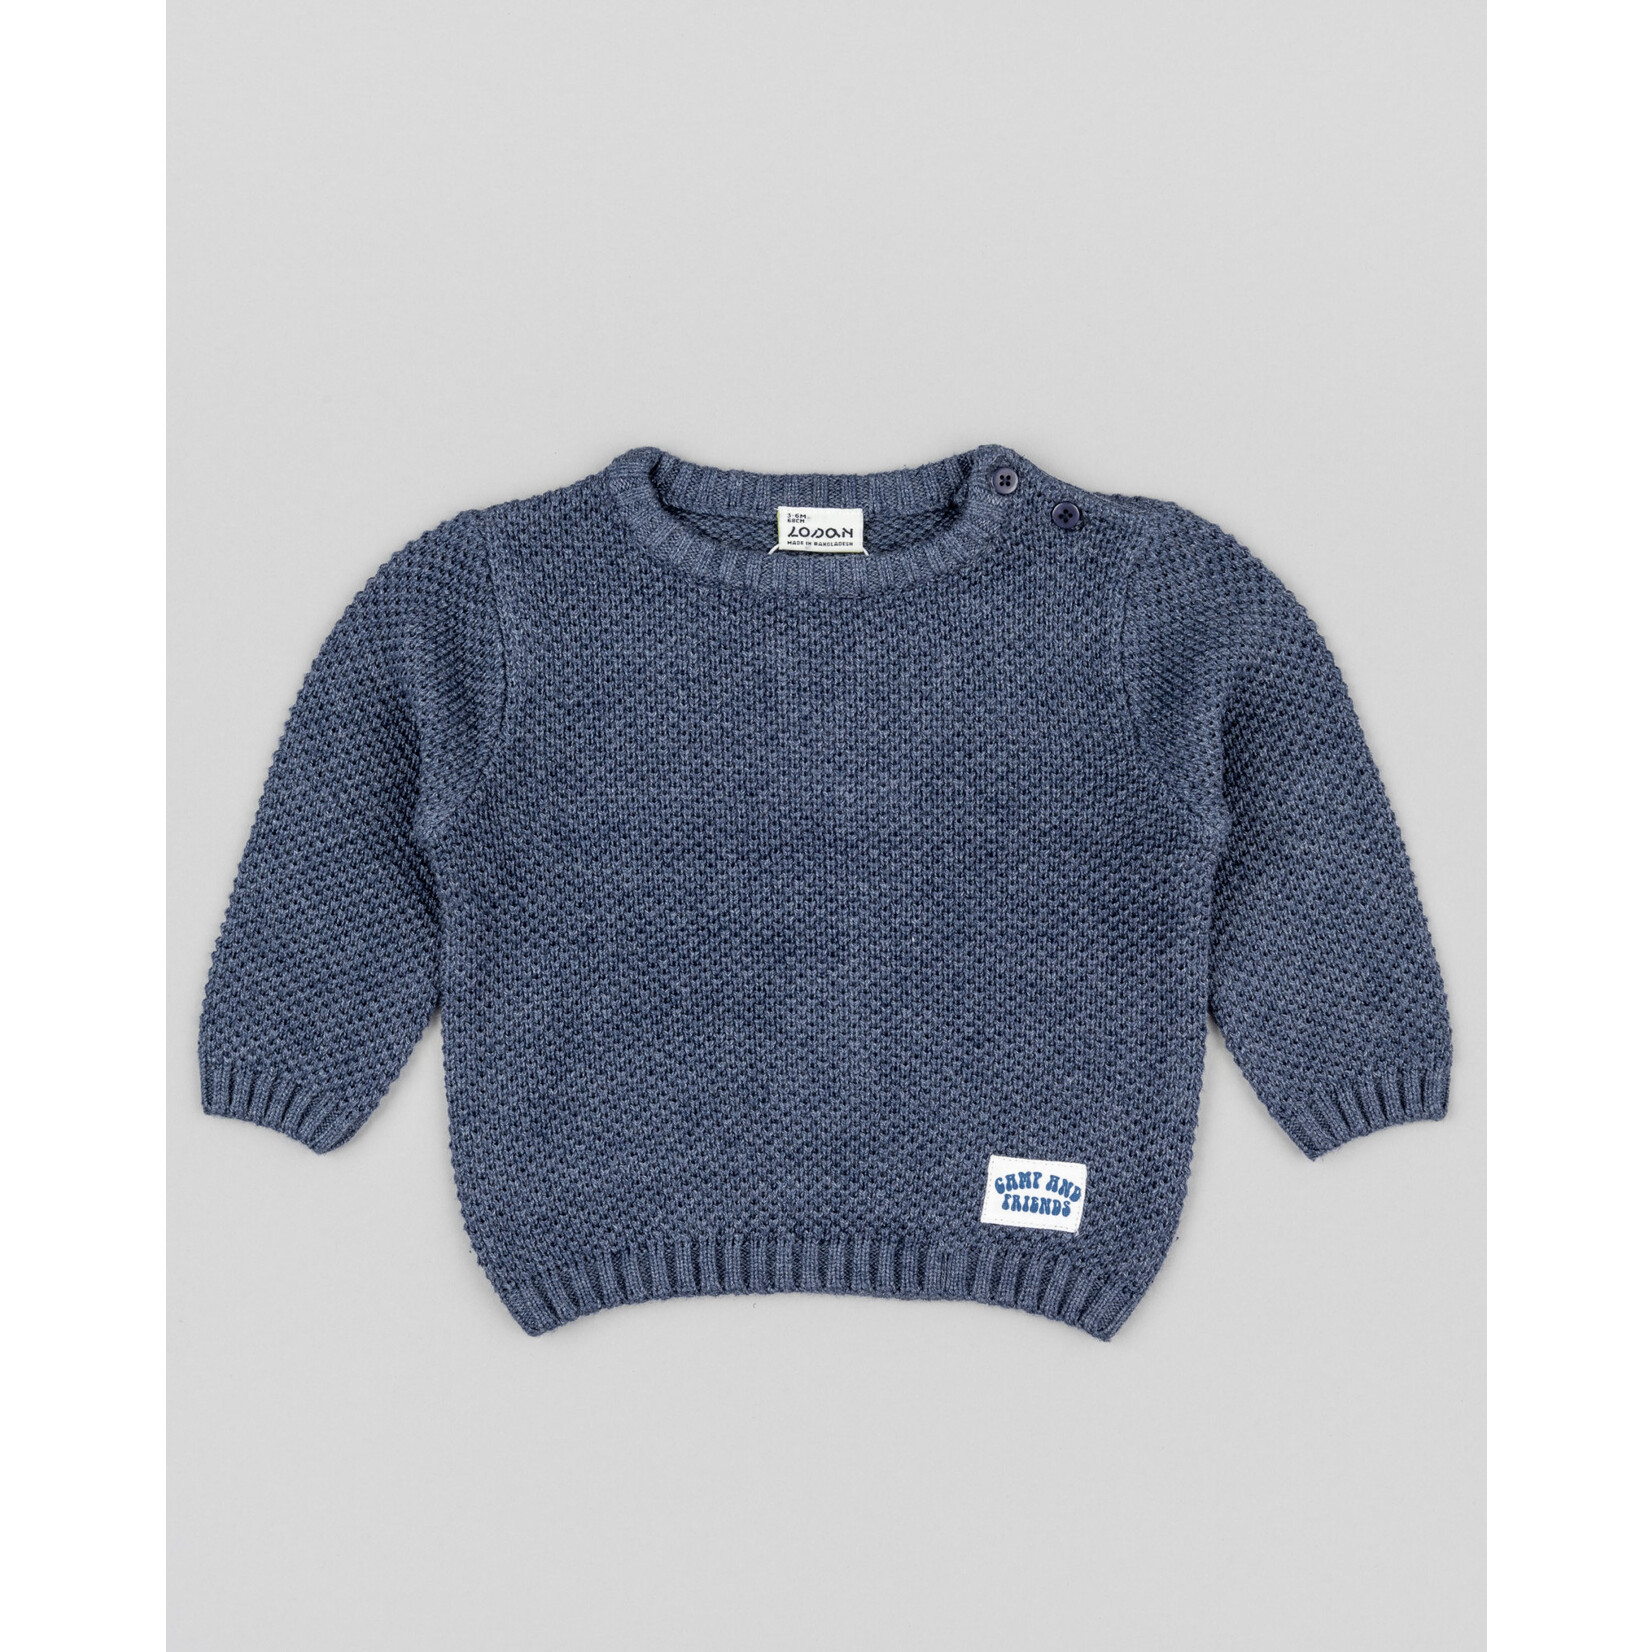 Losan LOSAN - Navy blue light-knit sweater 'Camp friends'